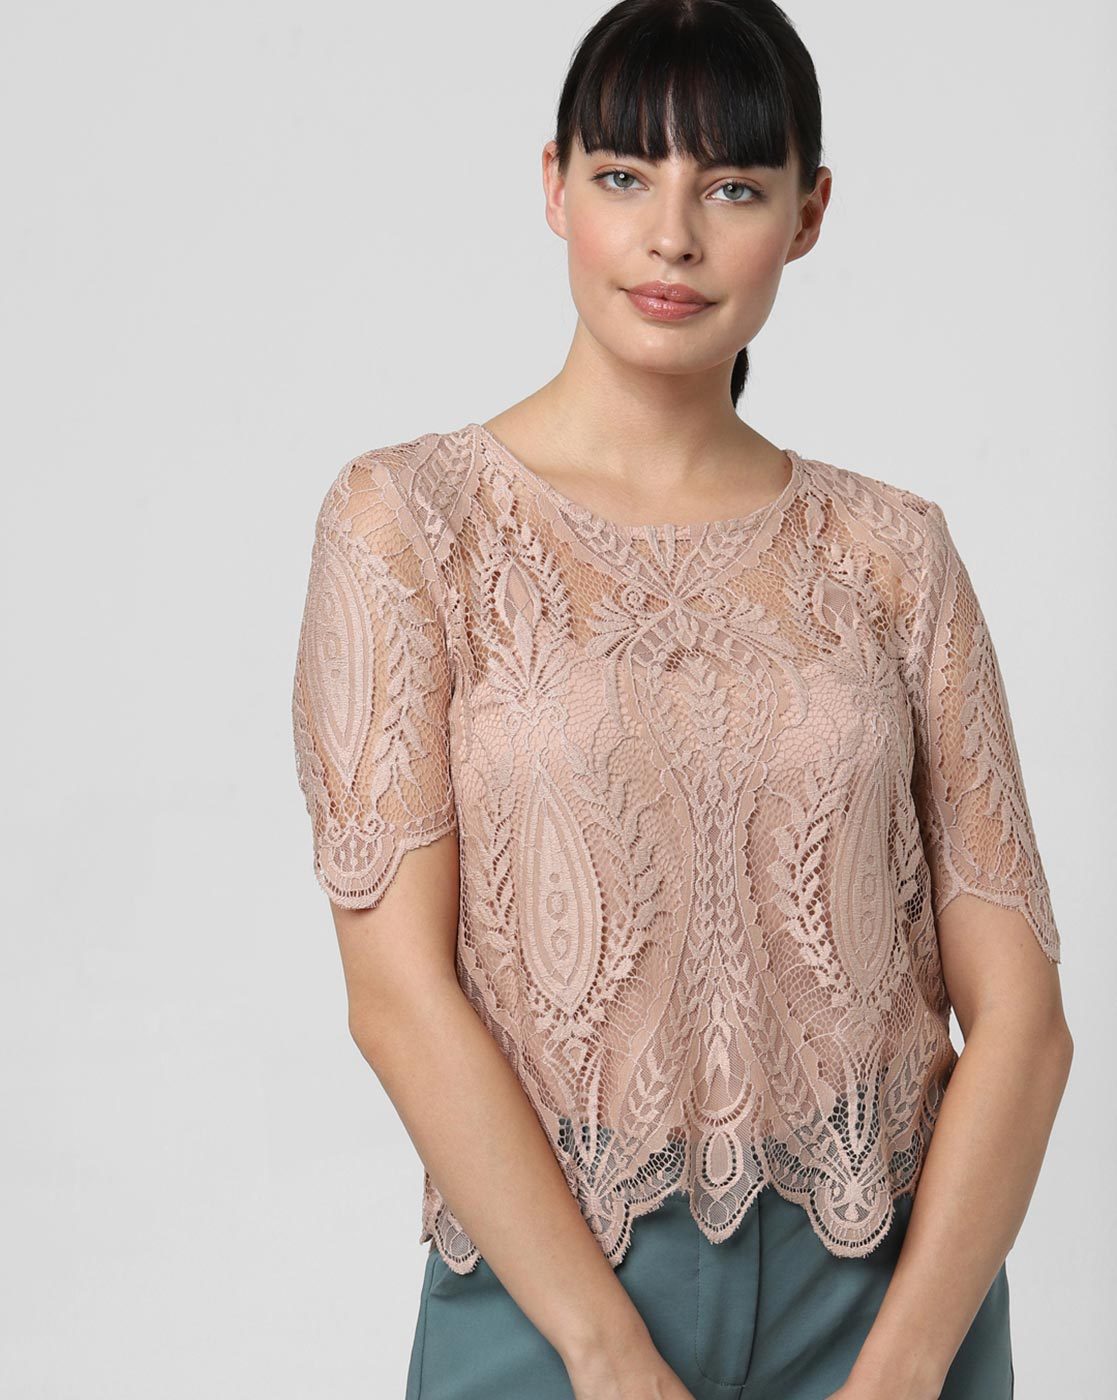 Buy Tops for Women by Moda Online | Ajio.com